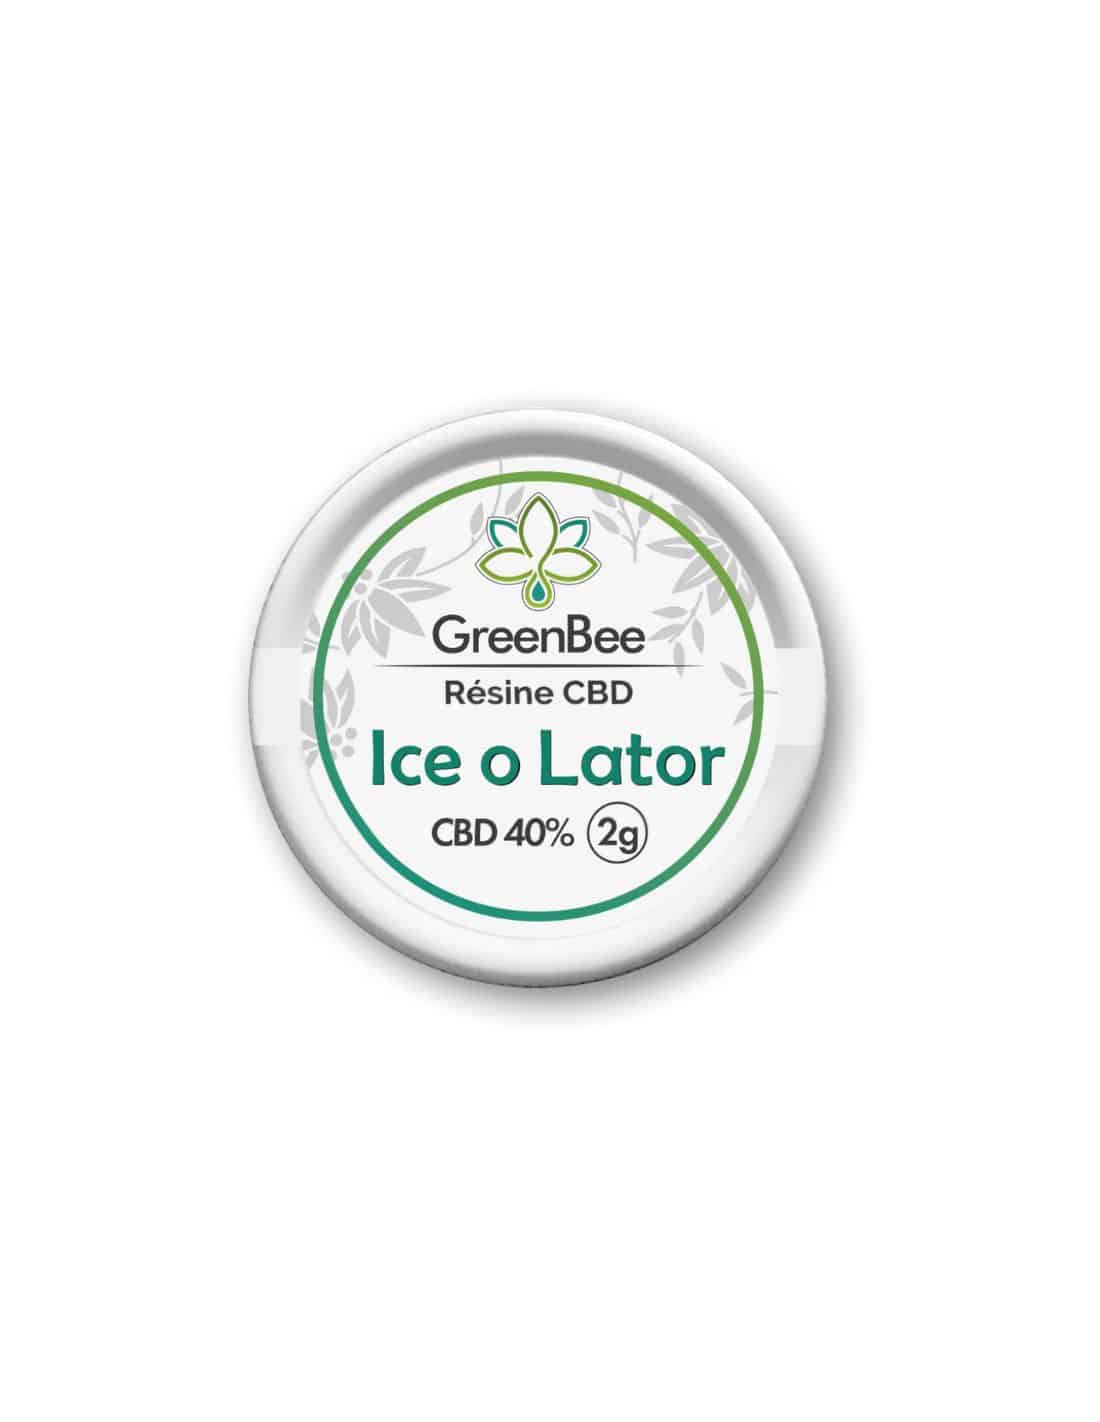 ICE O LATOR CBD